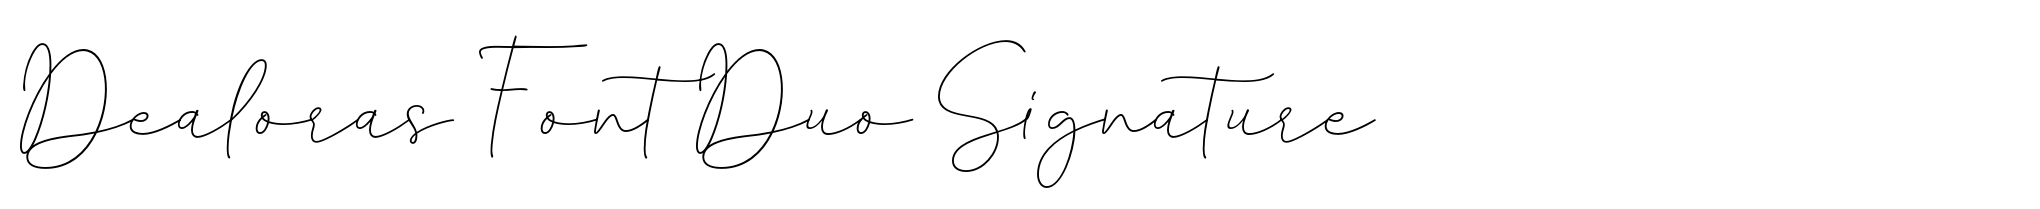 Dealoras Font Duo Signature image